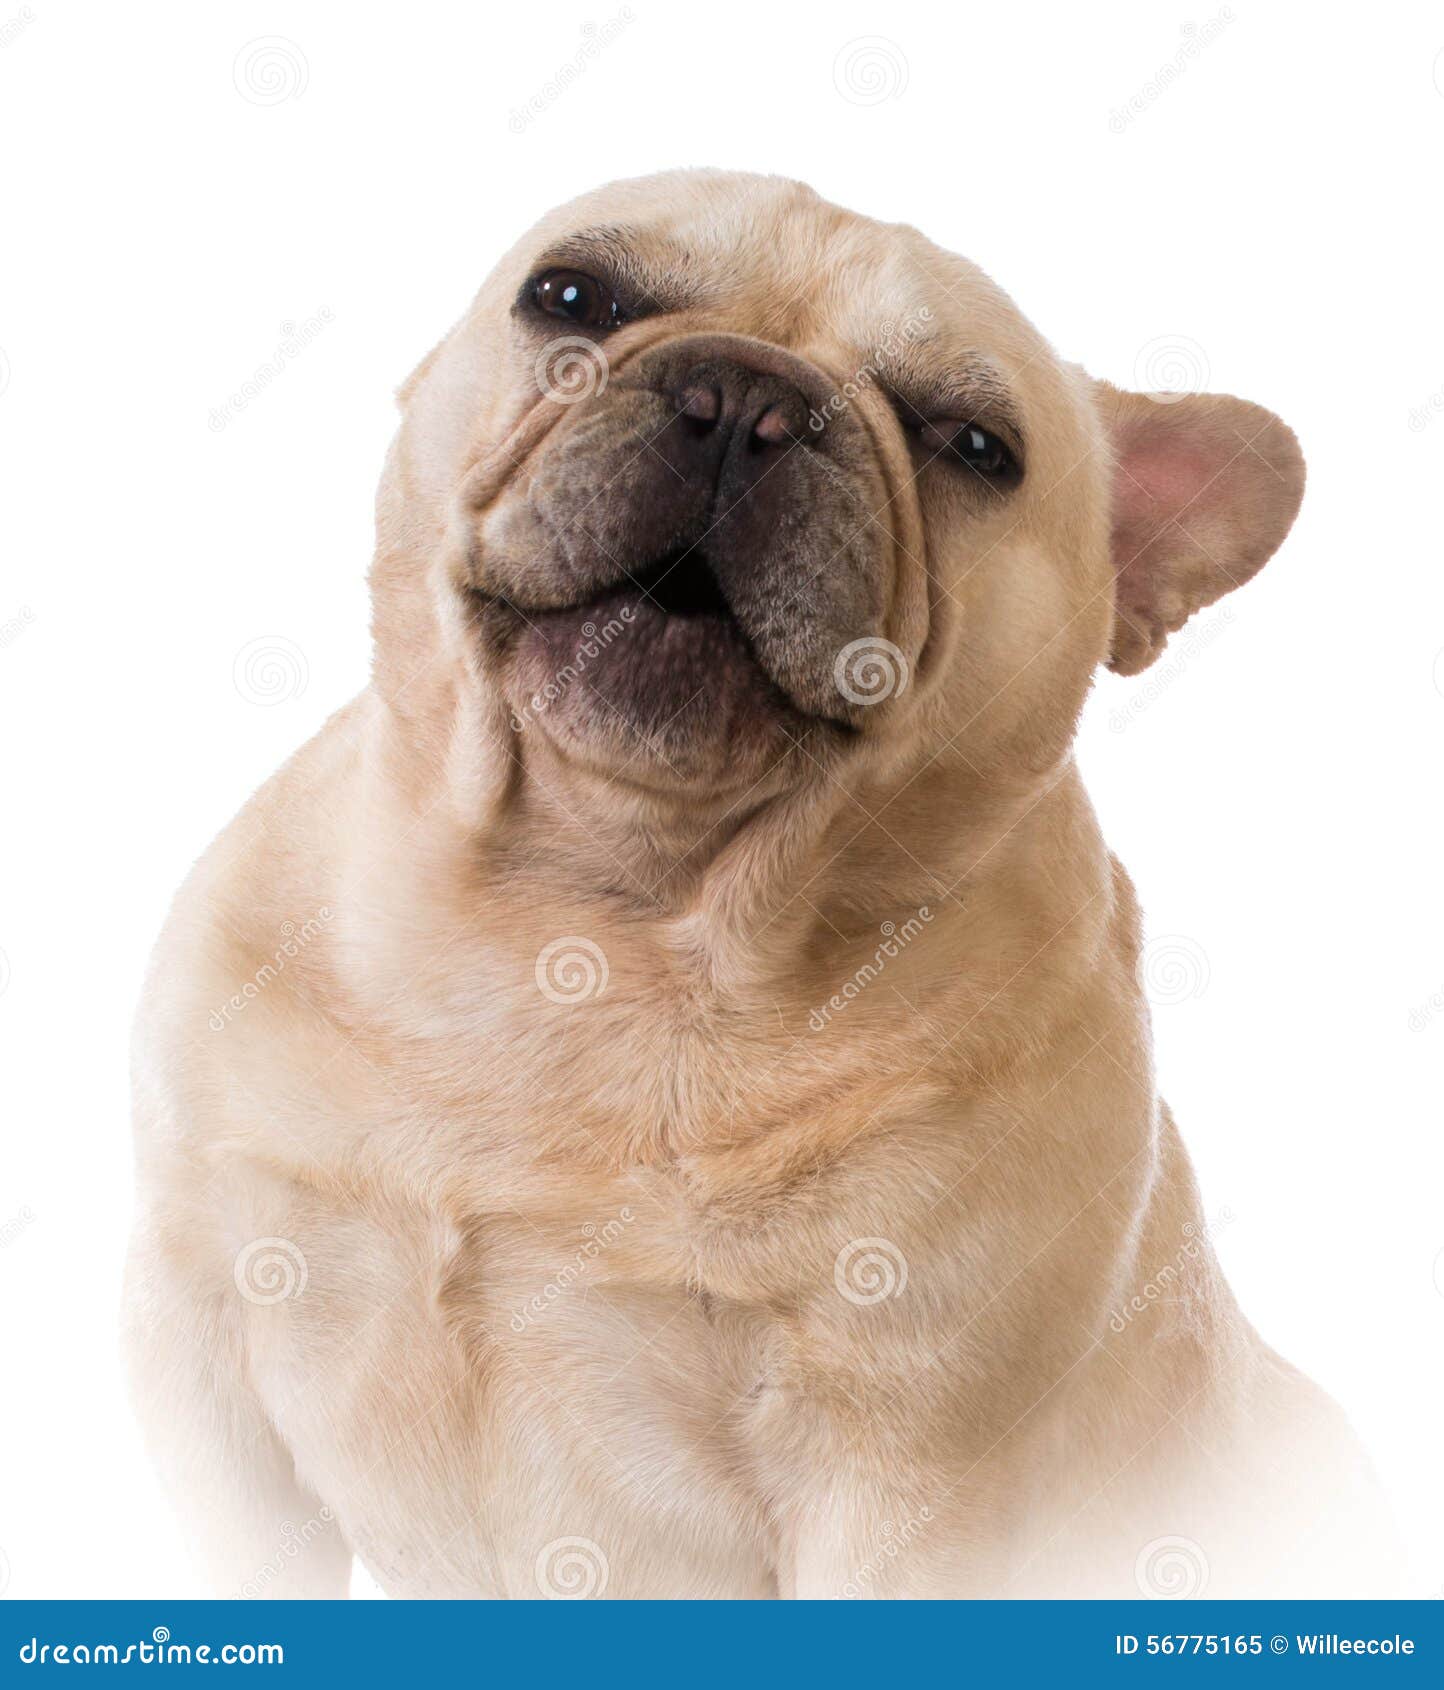 Happy dog - french bulldog with happy expression on white background